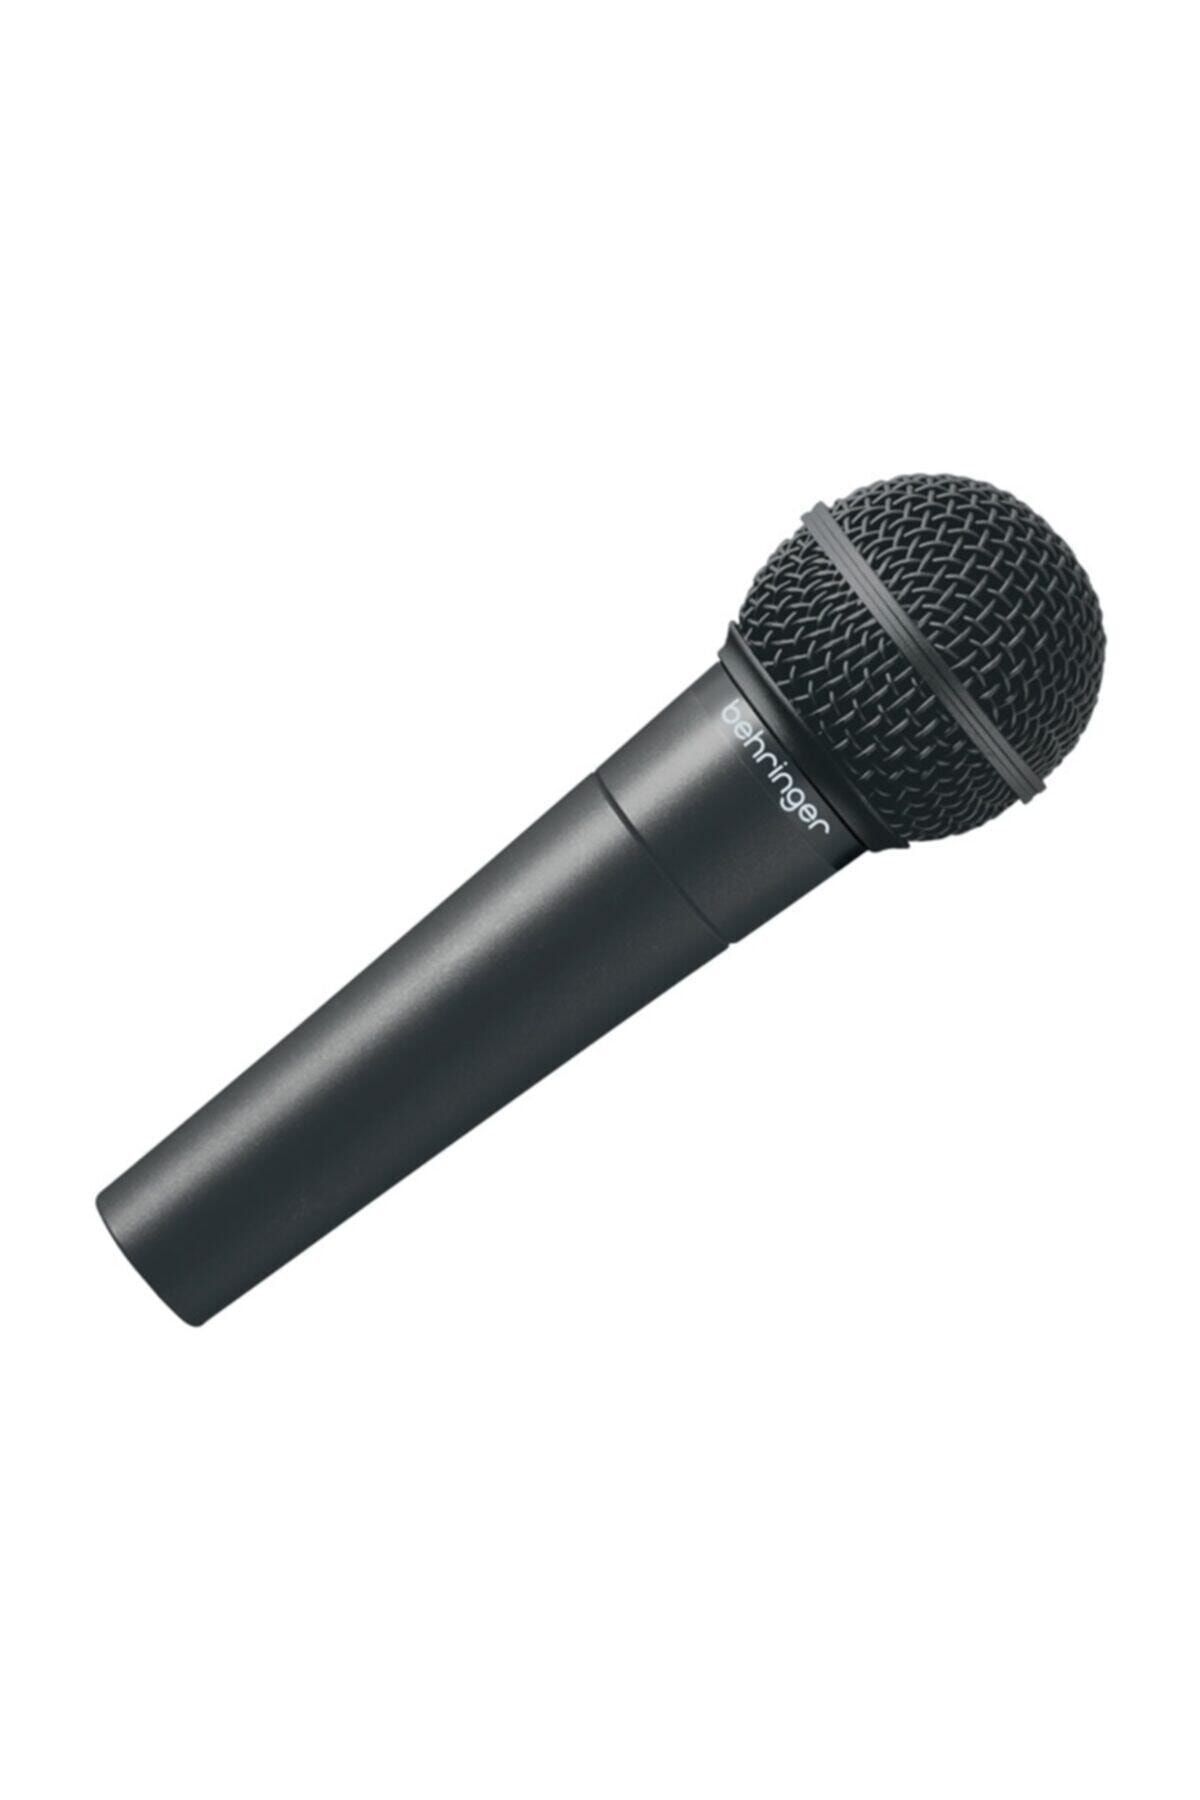 Behringer Ultravoice Xm8500 Dinamik Kardioid Vokal Sahne Mikrofonu